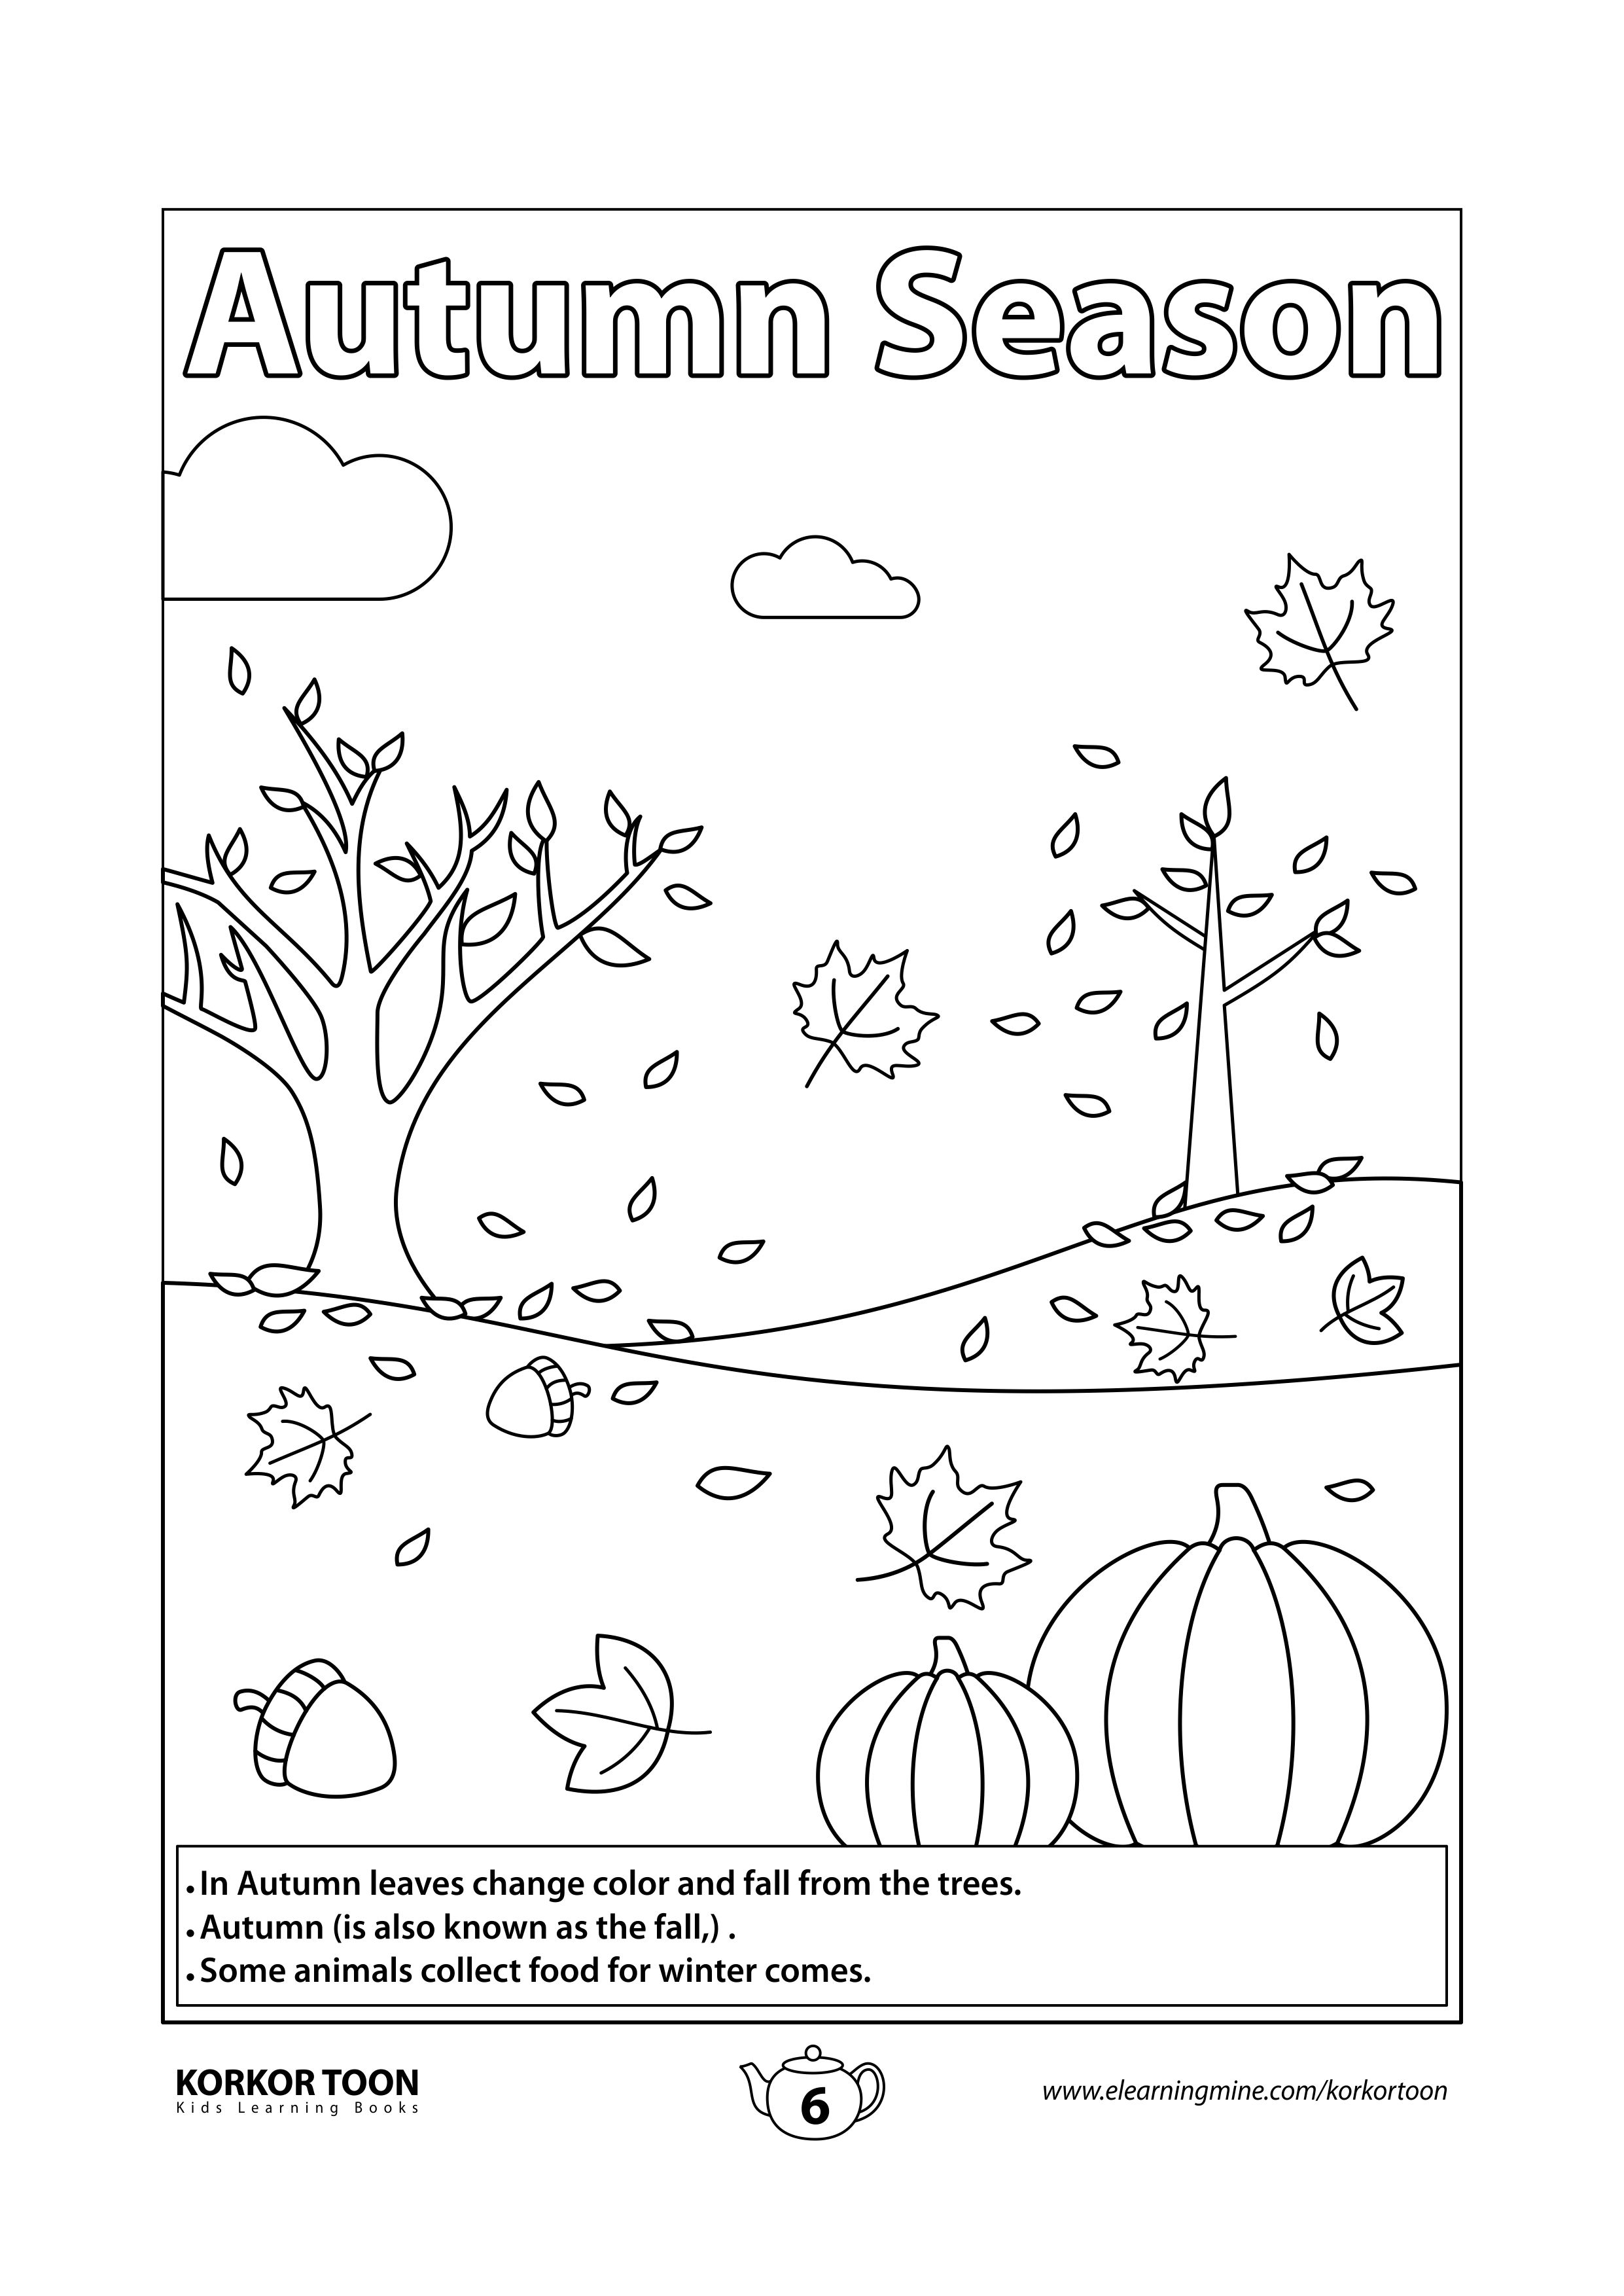 Seasons coloring book for kids autumn season coloring page fall preschool worksheets handwriting worksheets for kids seasons worksheets